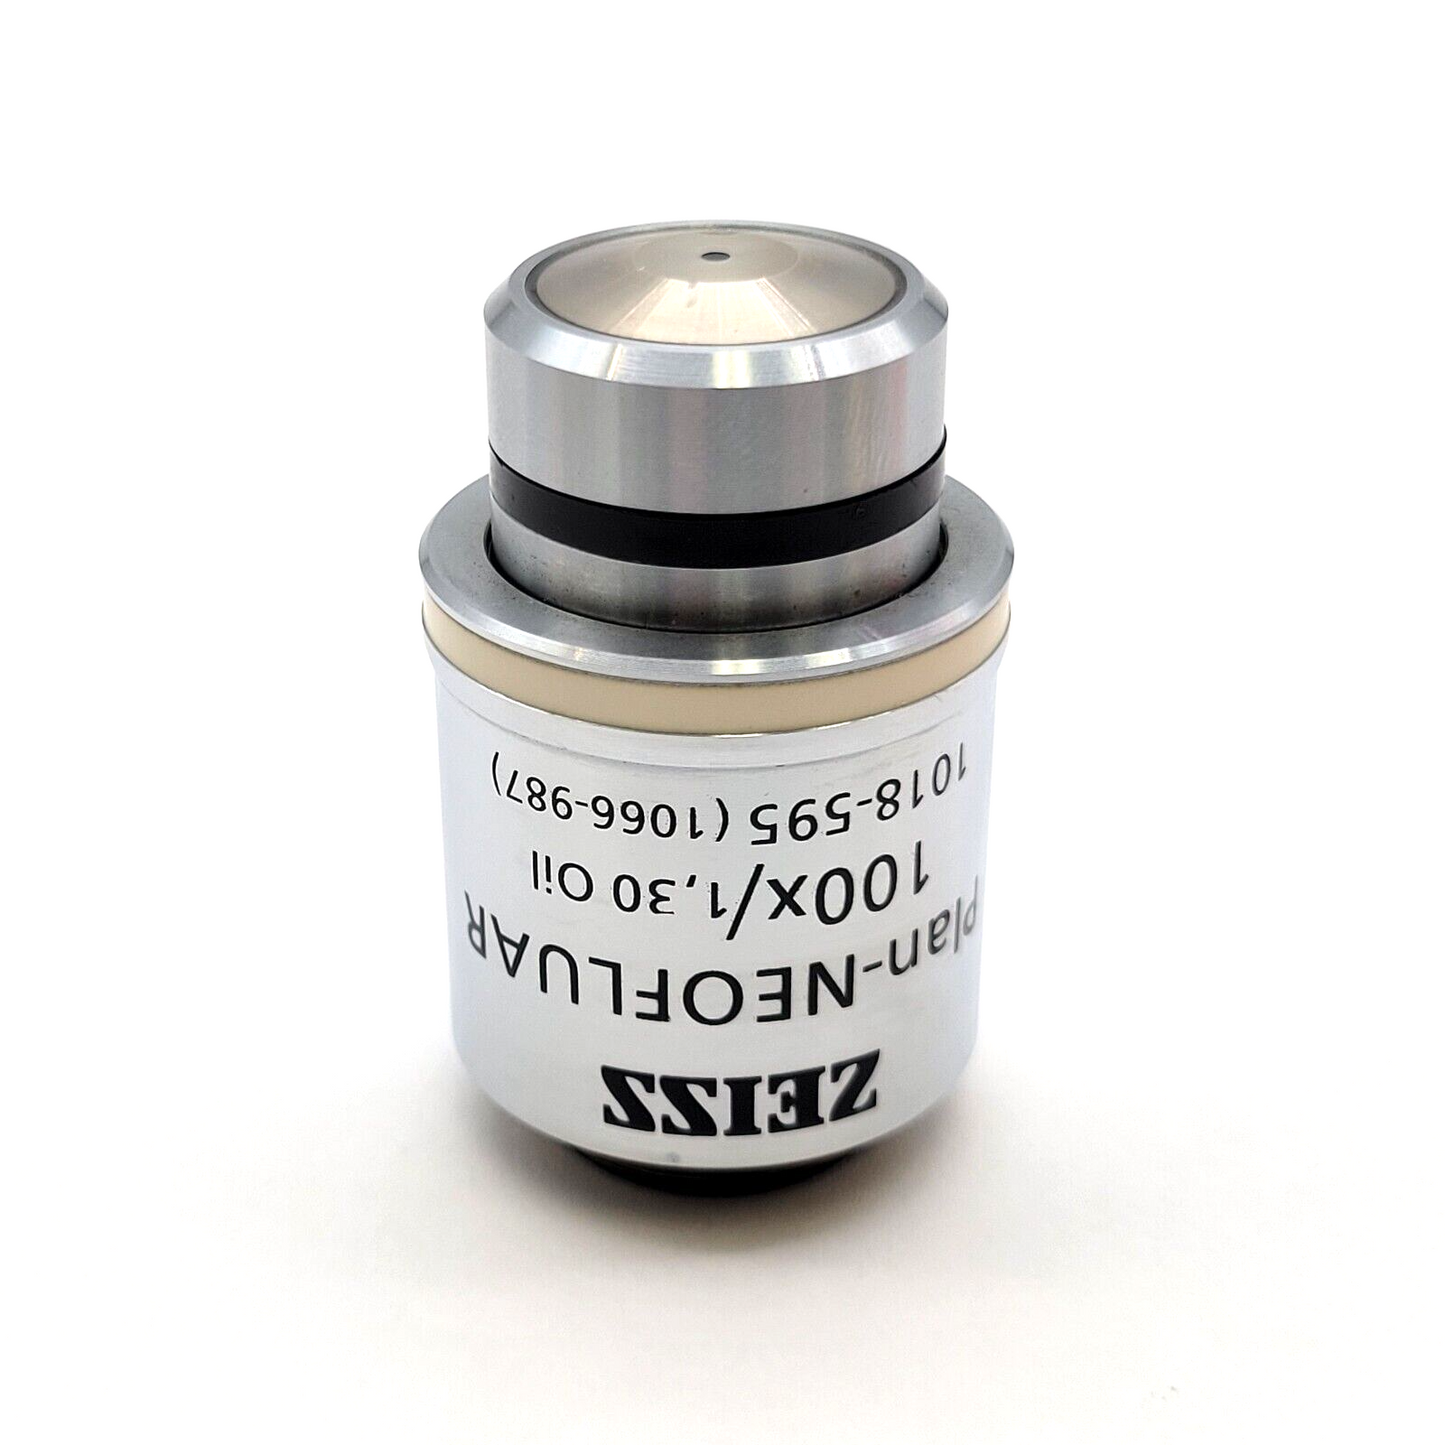 Zeiss Microscope Objective Plan Neofluar 100x 1.30 Oil 1018-595 - microscopemarketplace